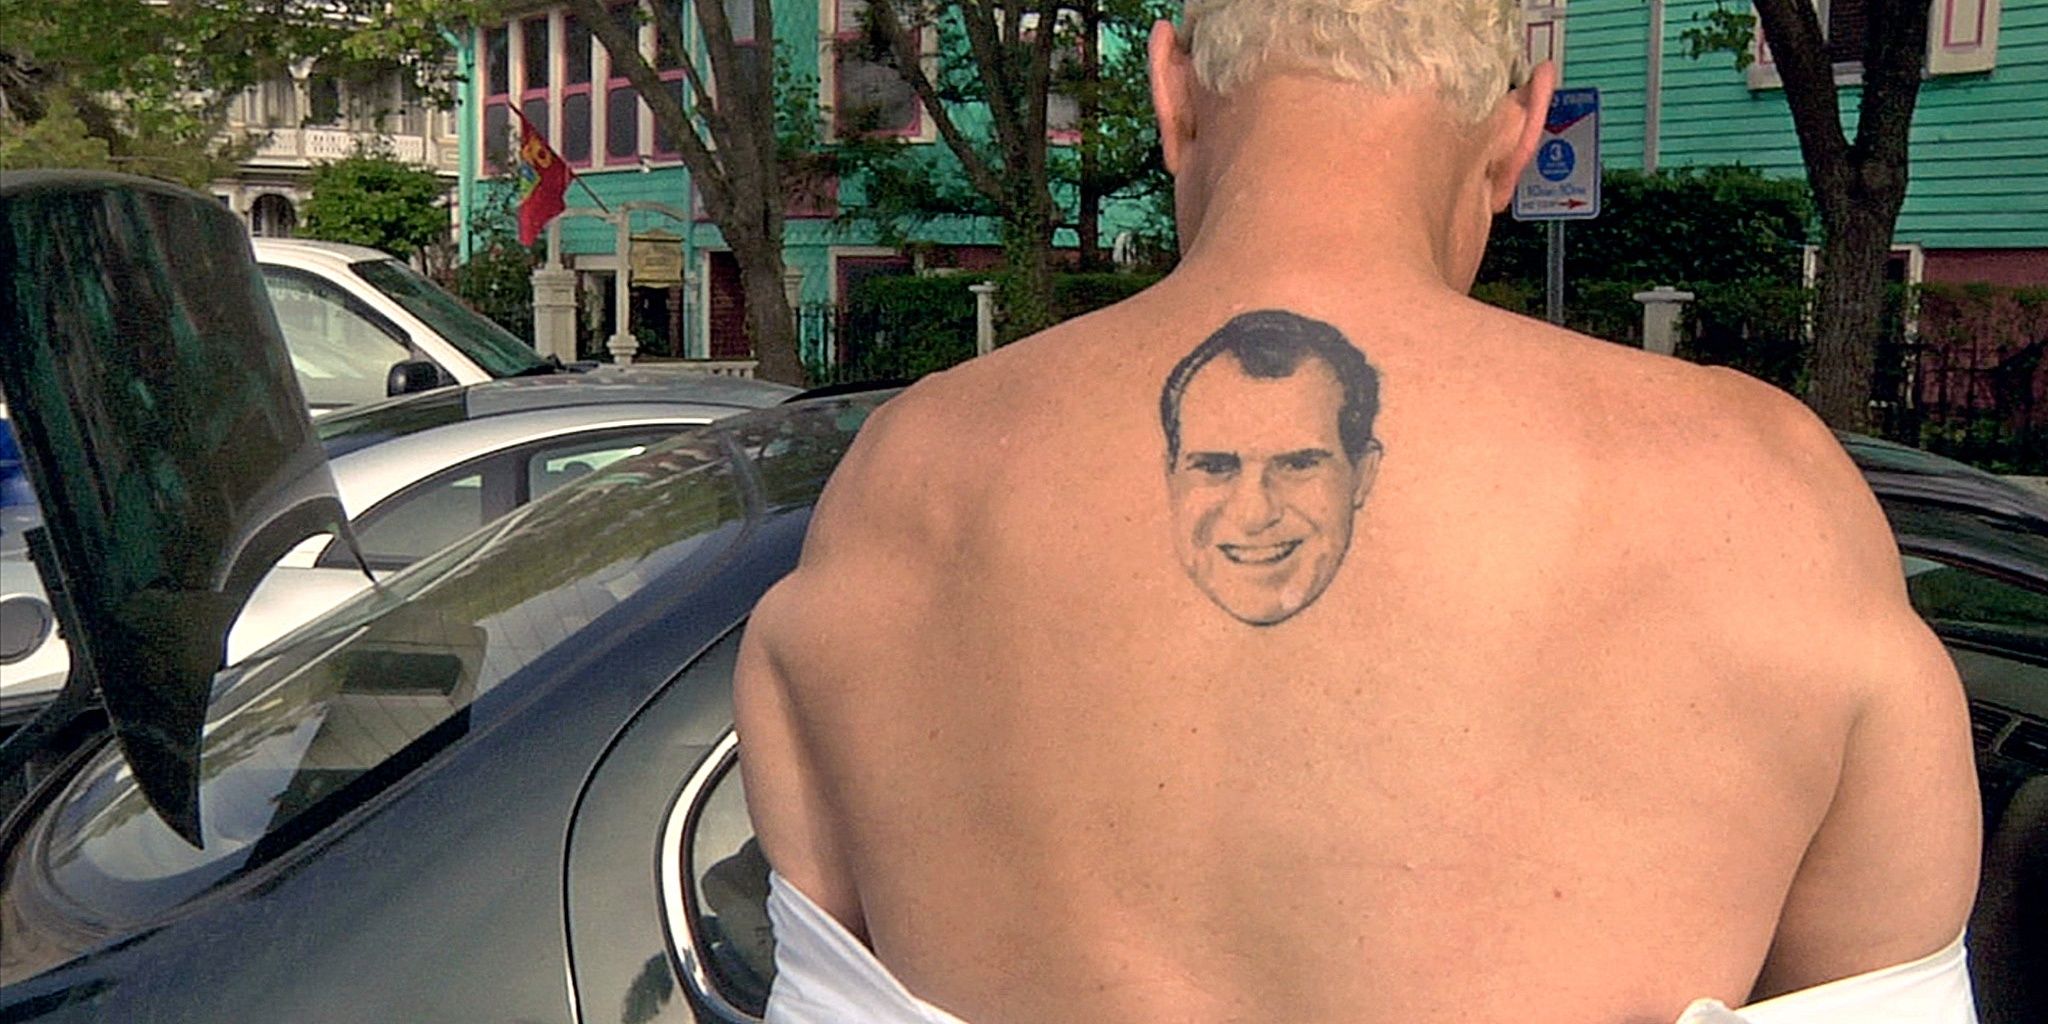 Roger Stone Nixon back tattoo, white hair next to car